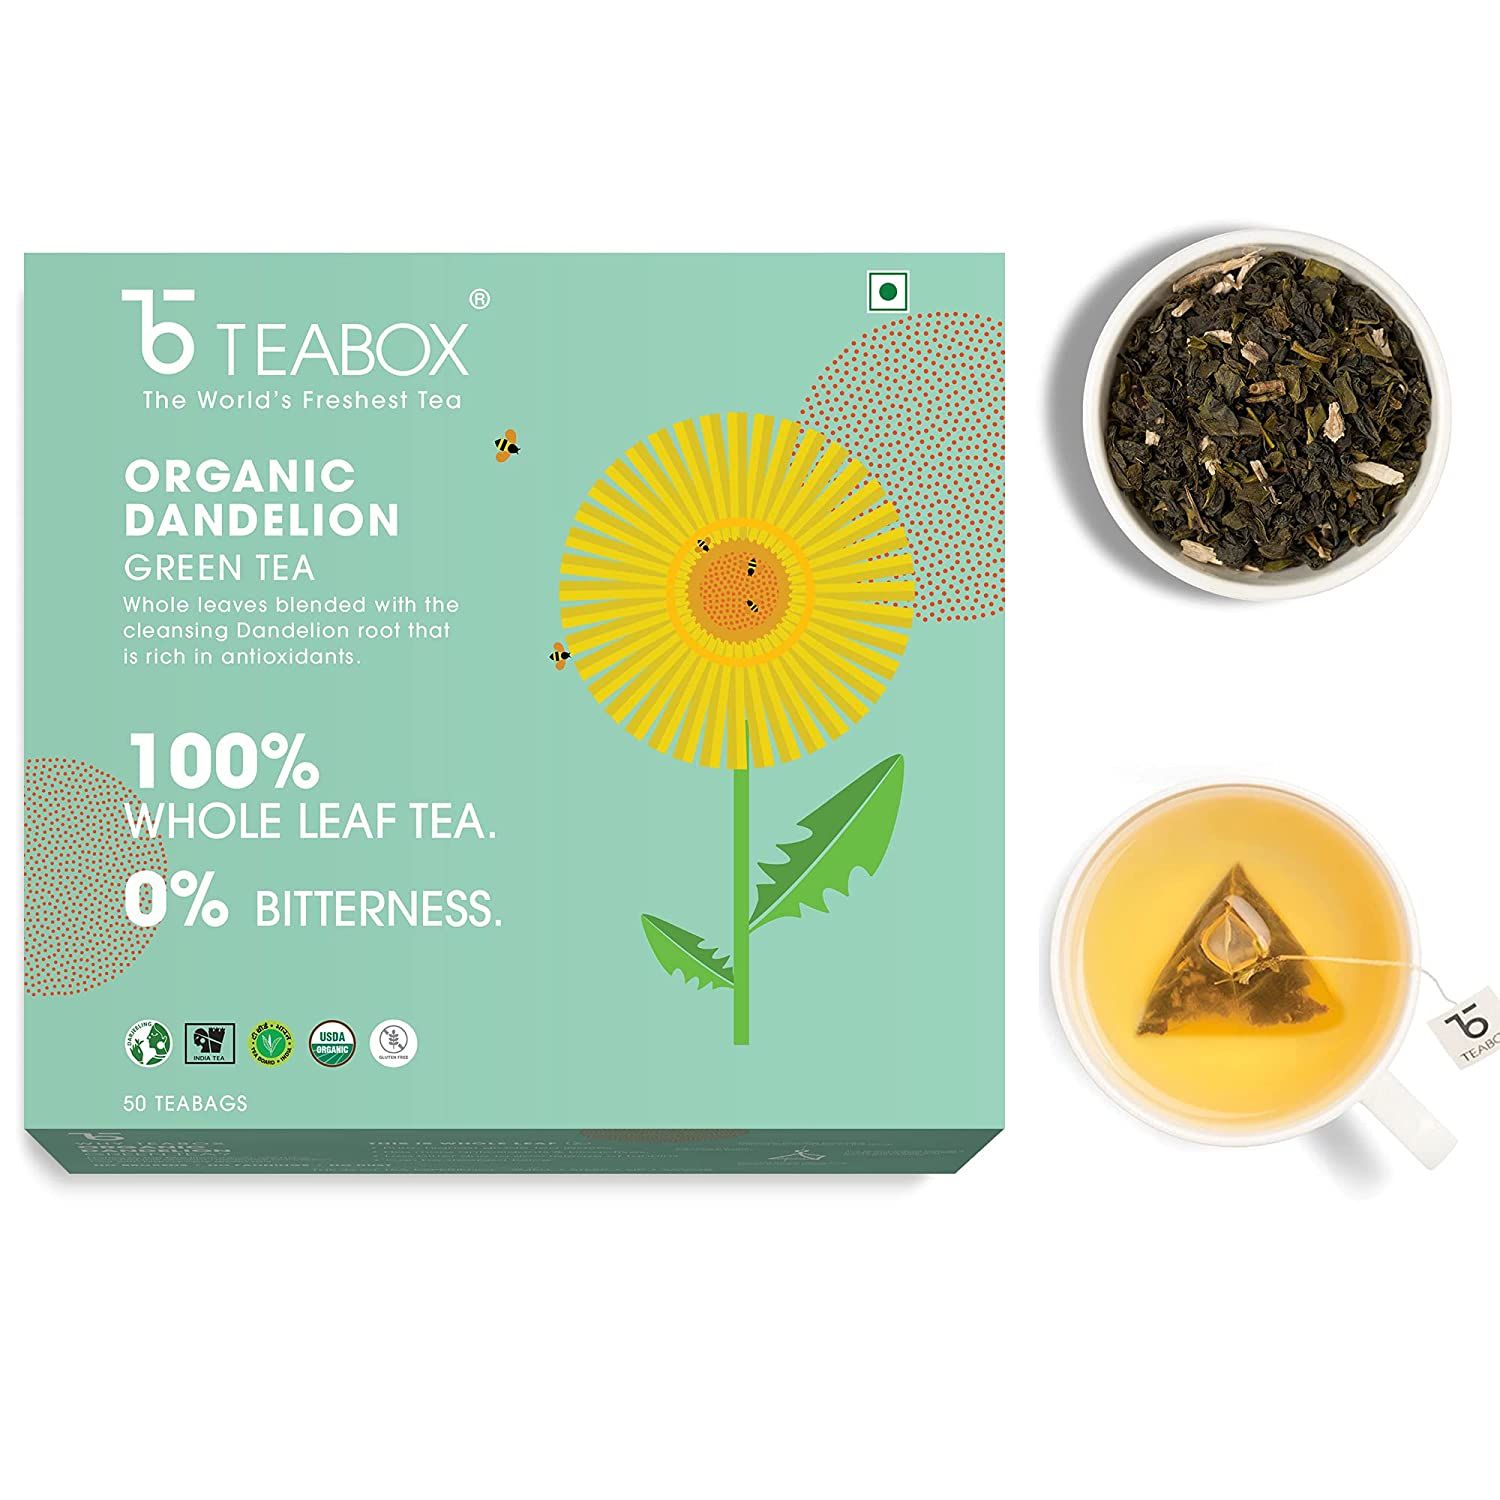 Teabox Organic Dandelion Green Tea Image